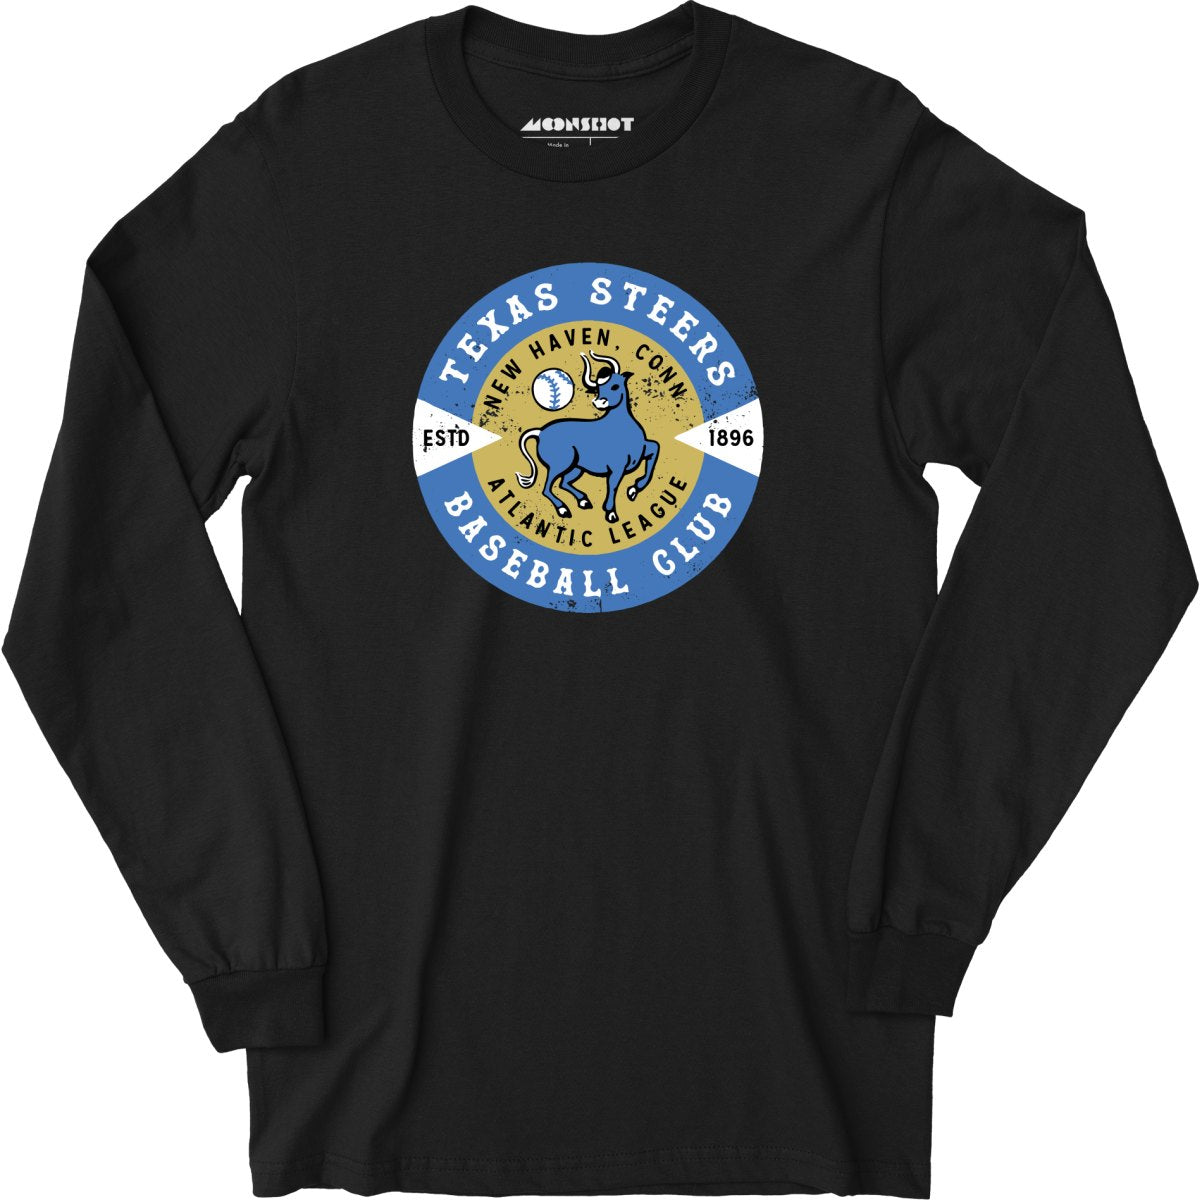 New Haven Texas Steers - Connecticut - Vintage Defunct Baseball Teams - Long Sleeve T-Shirt